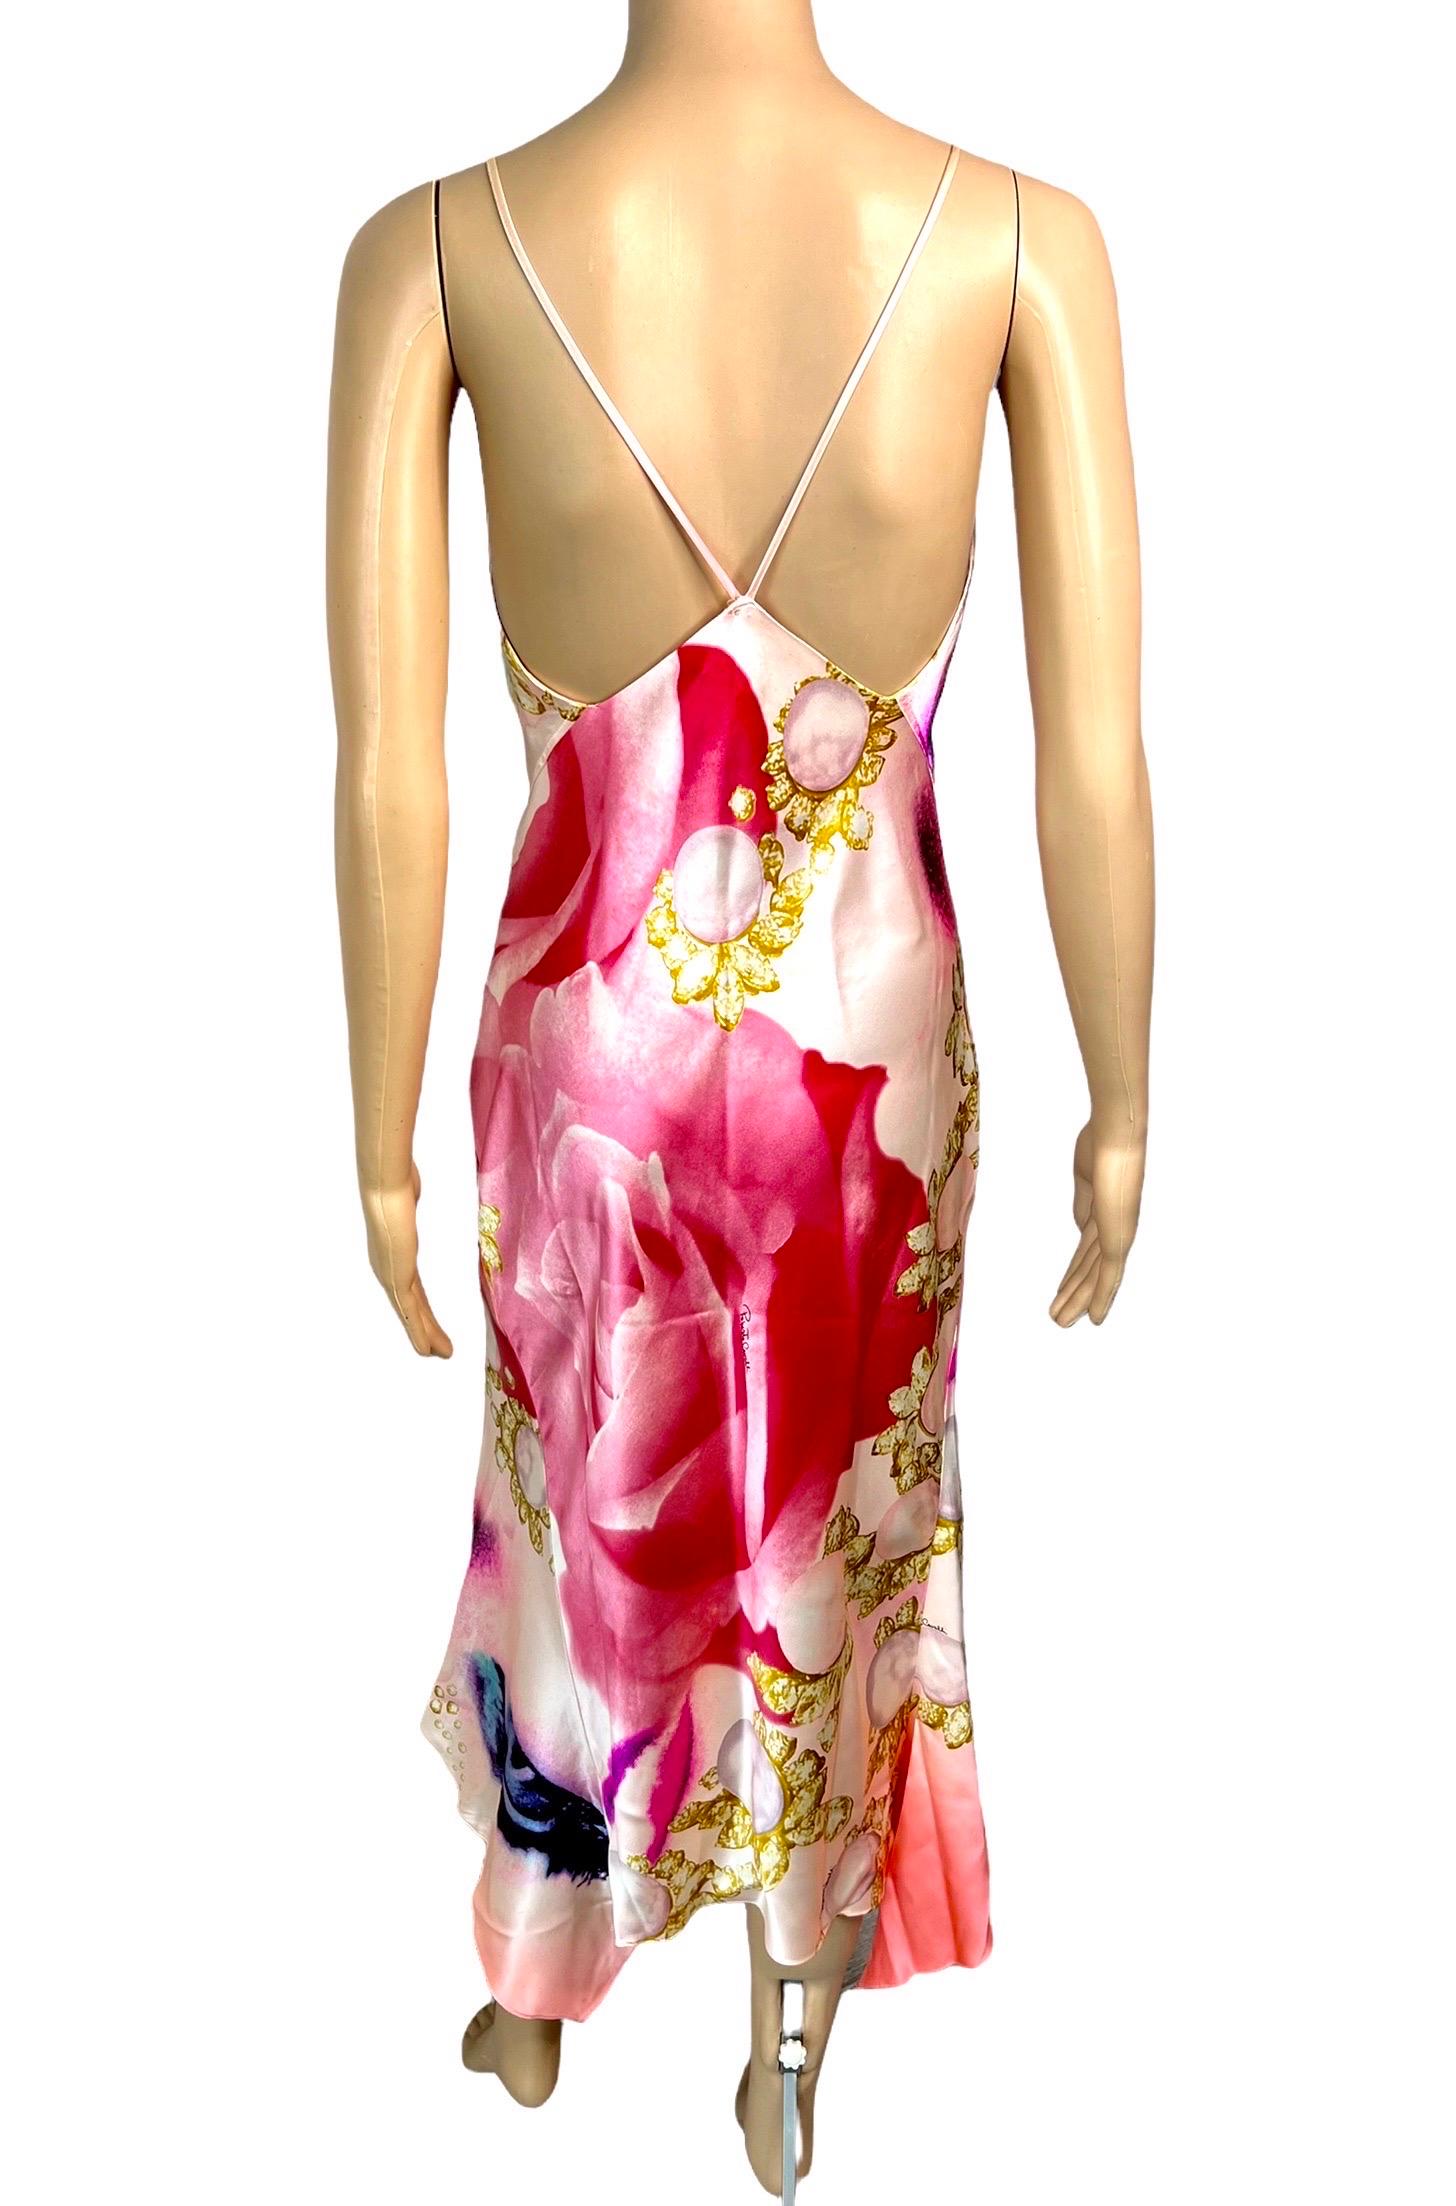 Roberto Cavalli S/S 2001 Runway Face Eye Print Bias Cut Silk Slip Evening Dress  In Good Condition For Sale In Naples, FL